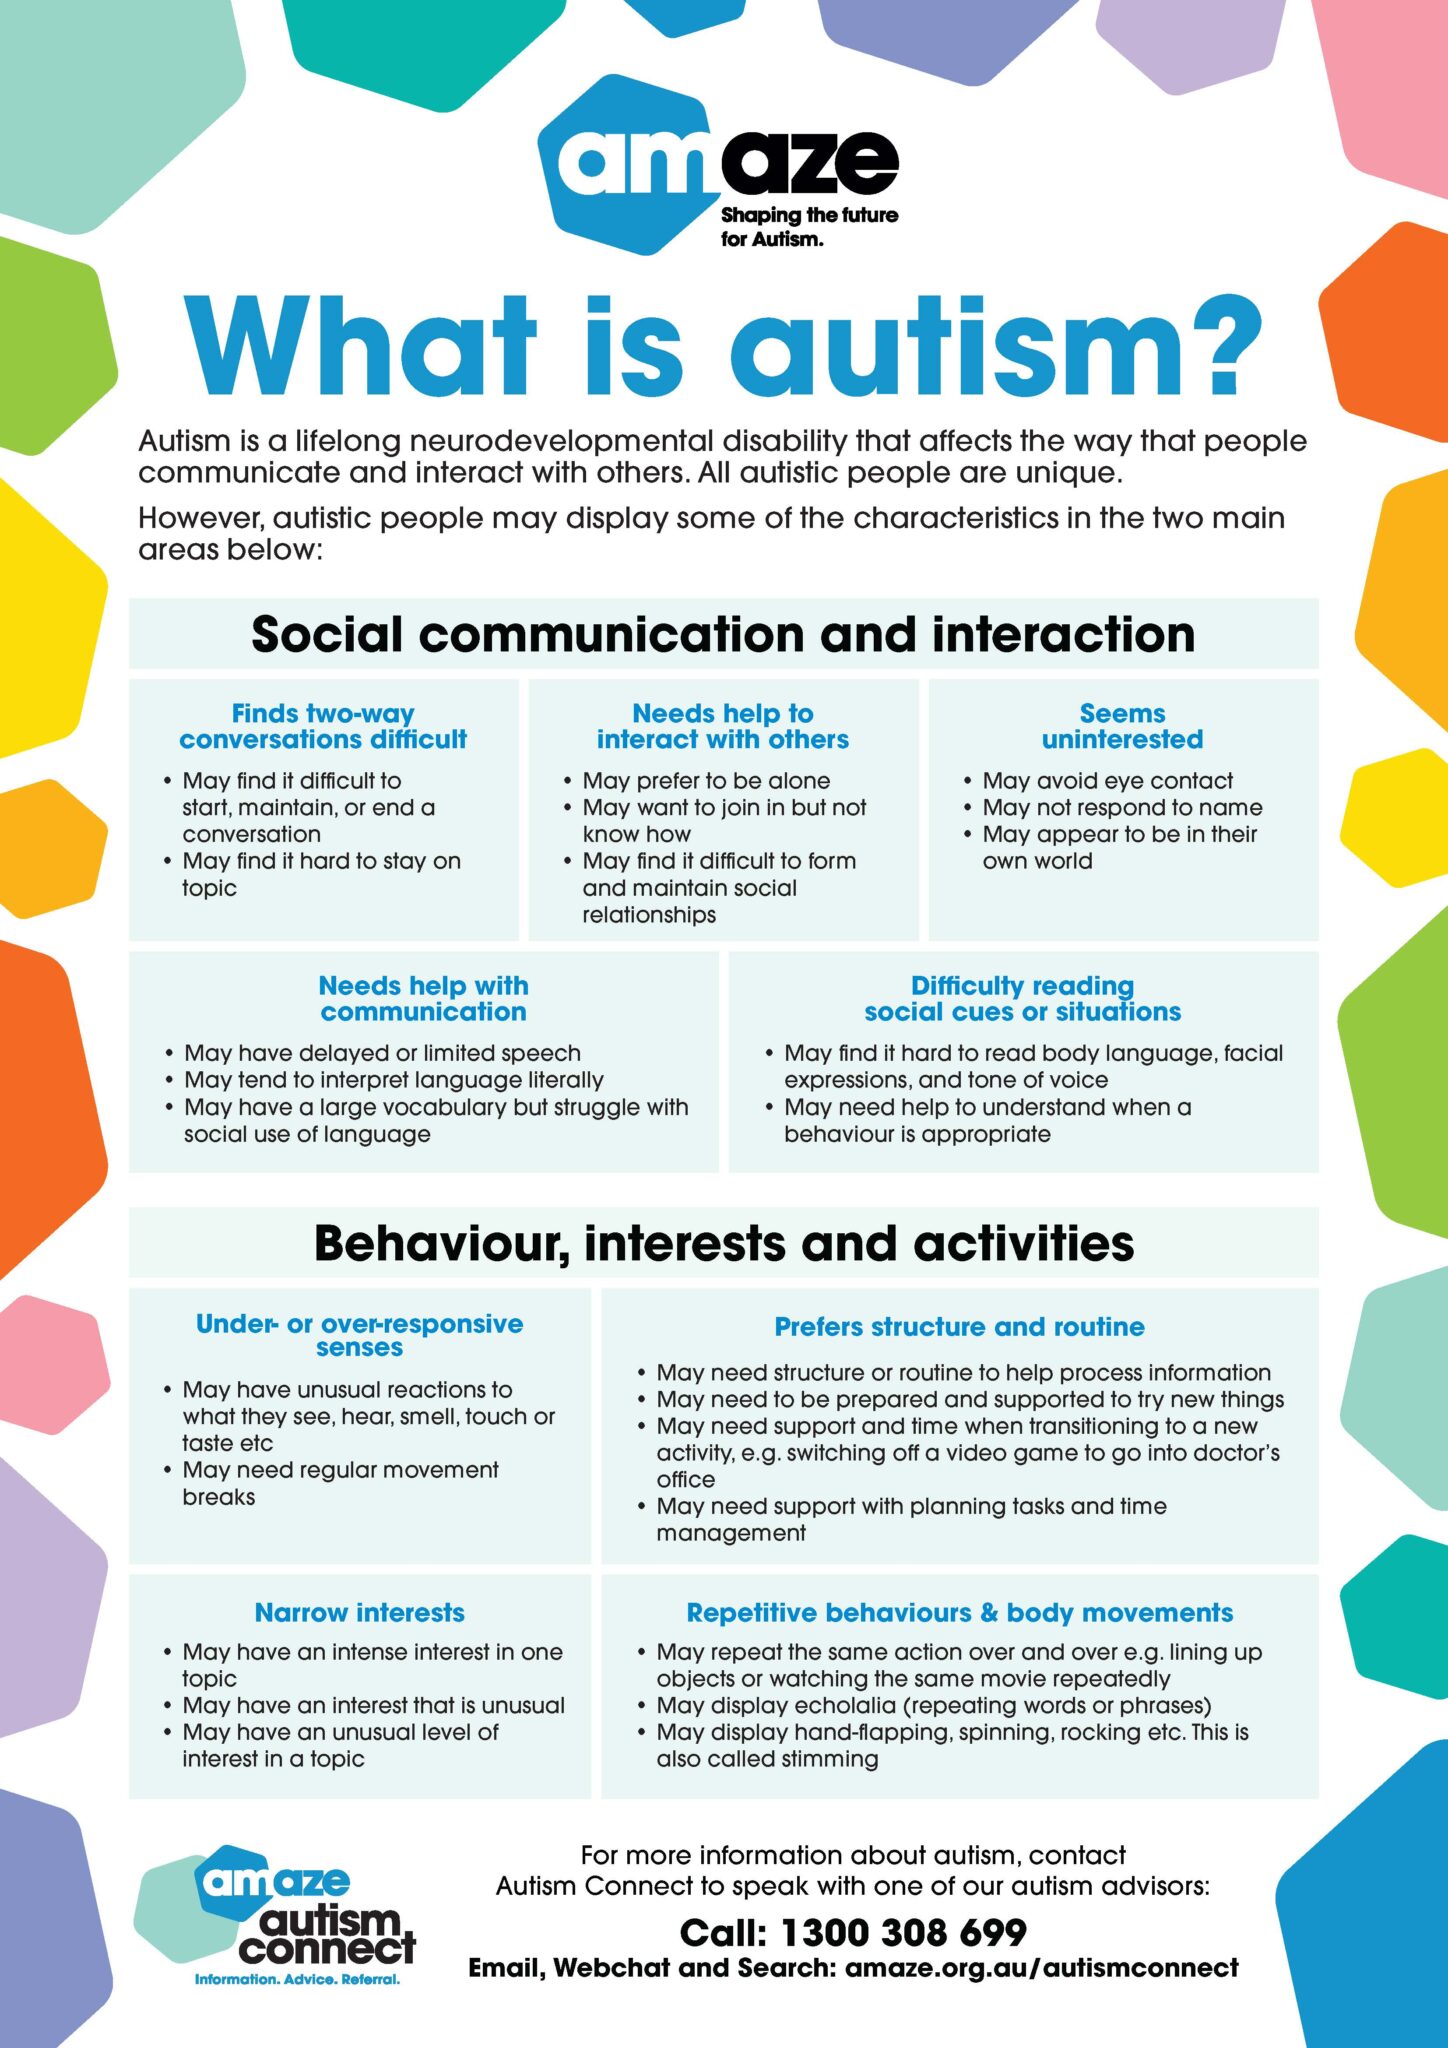 infographic summarising what autism is